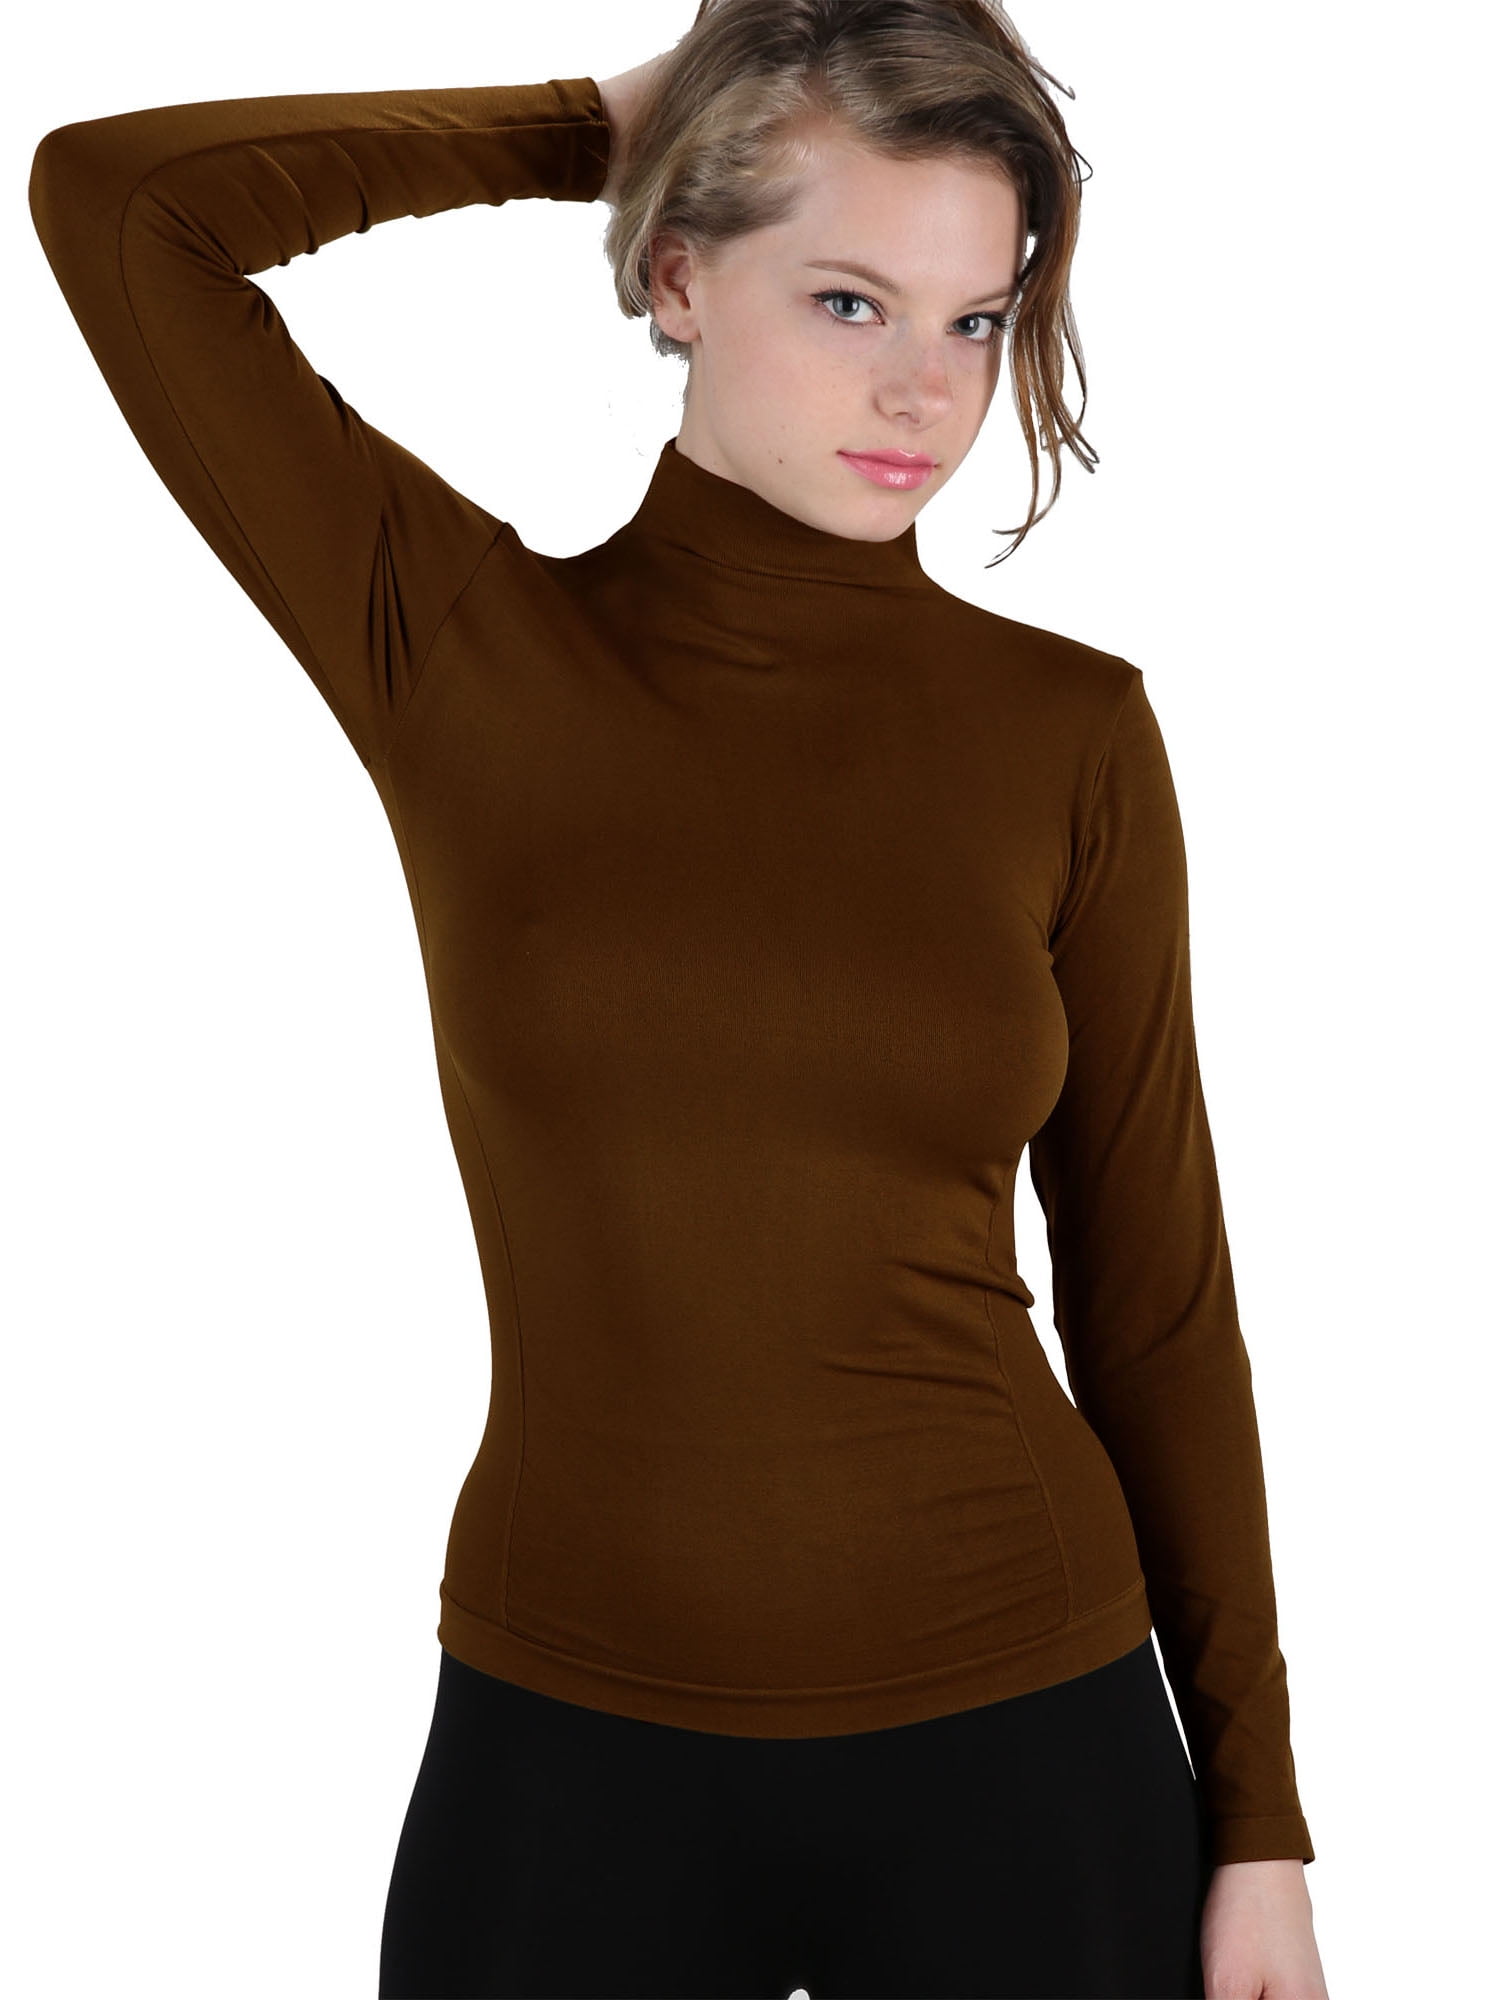 Women's Plain T Shirt Slim Fitted Half Sleeve Mock Turtle Neck Layering Fall Cute Tee Tops 